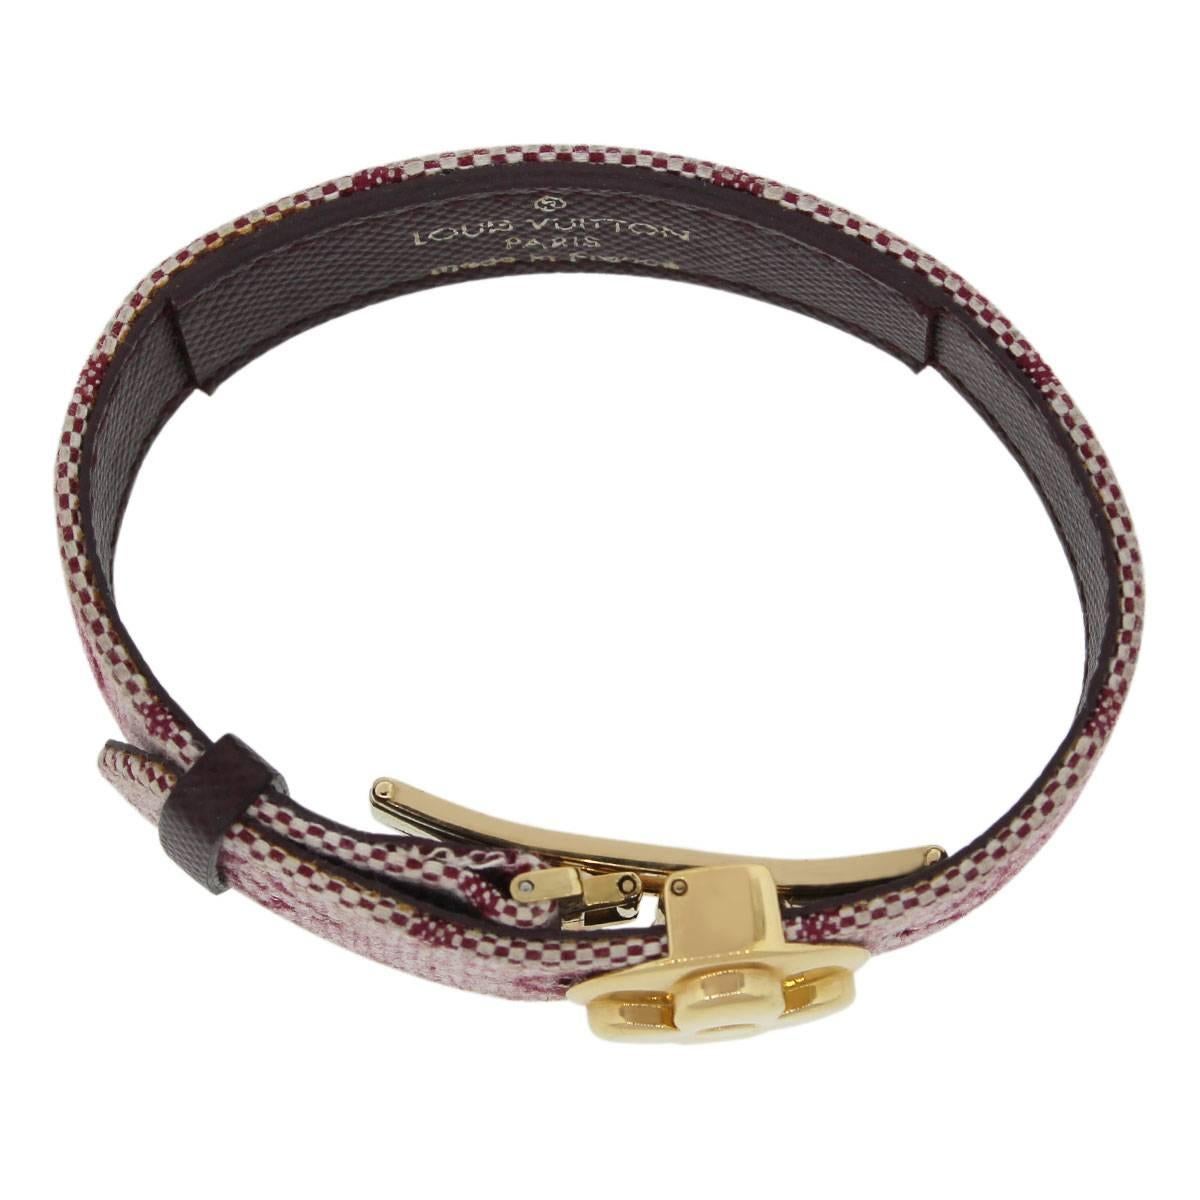 Company: Louis Vuitton
Style: Adjustable Bangle Bracelet
Measurements: Adjustable up to a 6.5